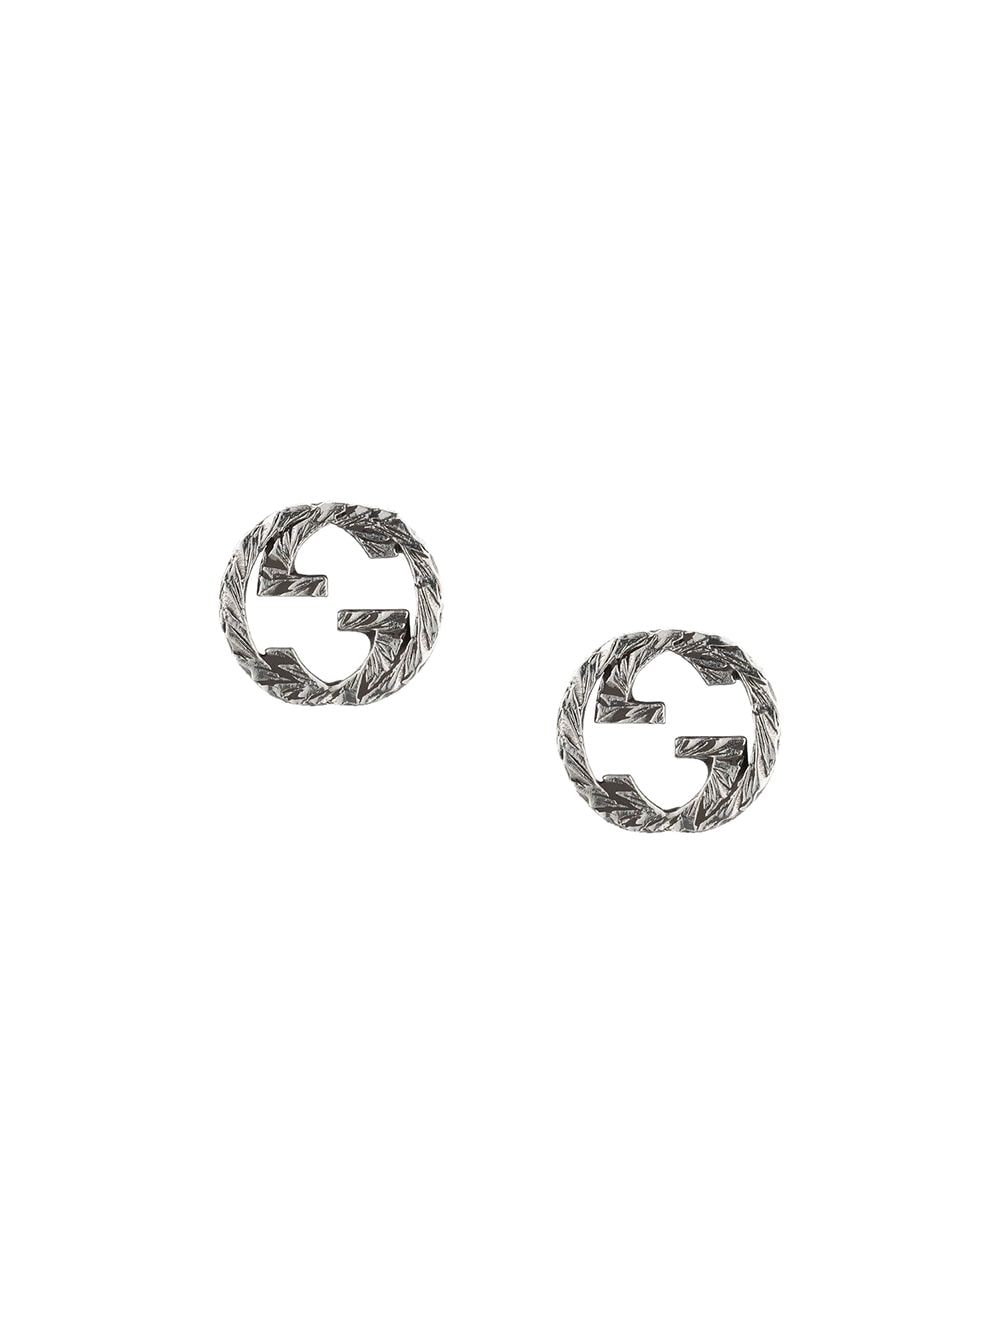 gucci earrings interlocking g